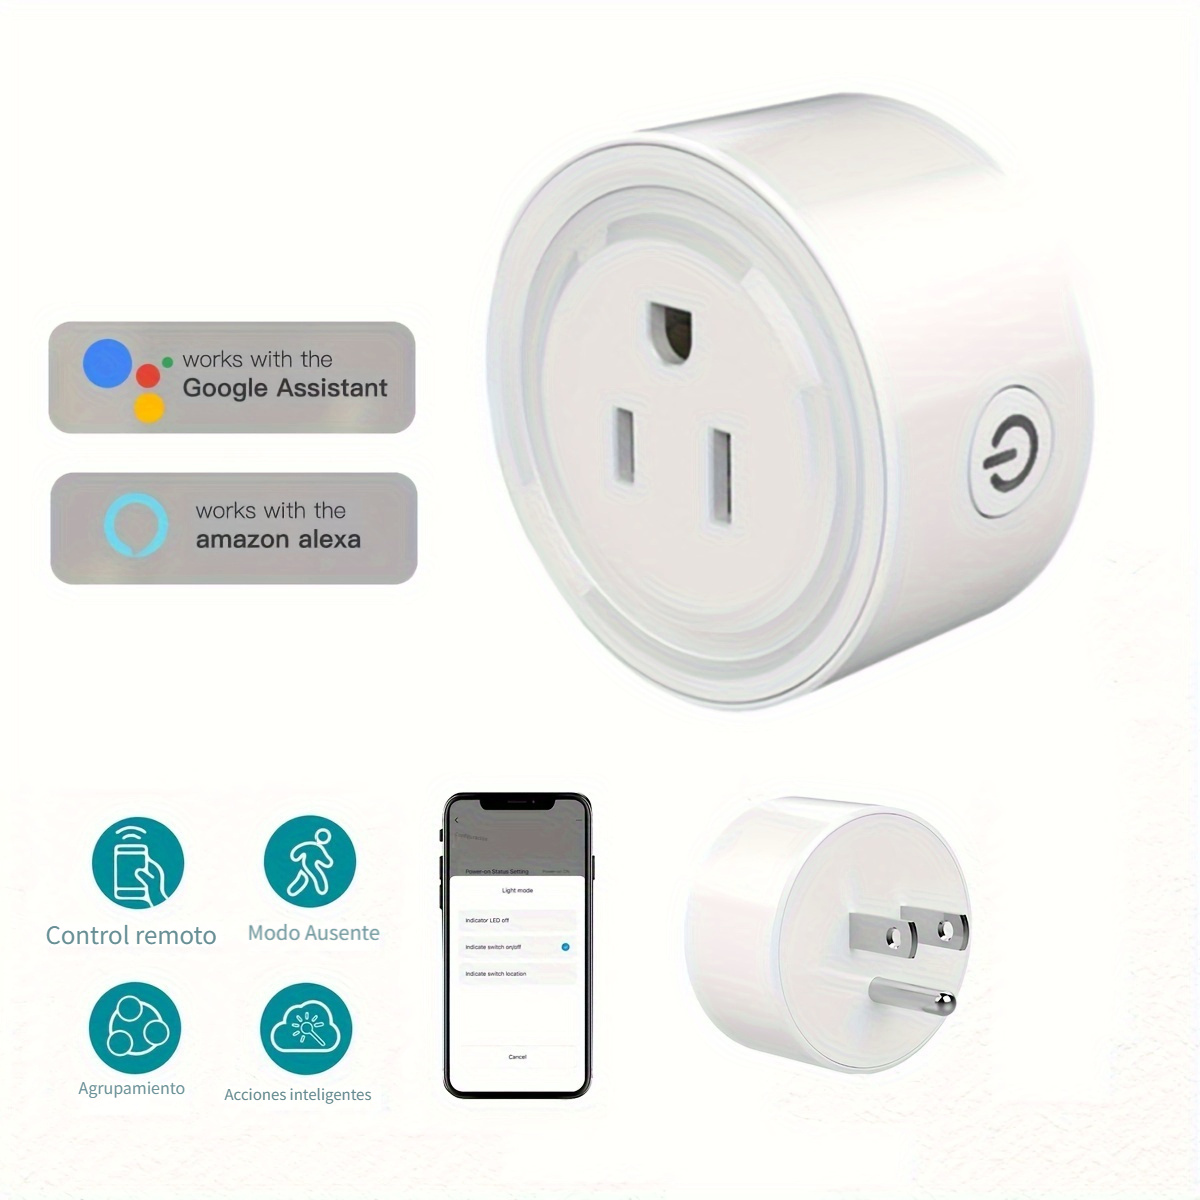 Tomacorriente Inteligente Smart Plug Alexa Google Home WiFi 2.4G